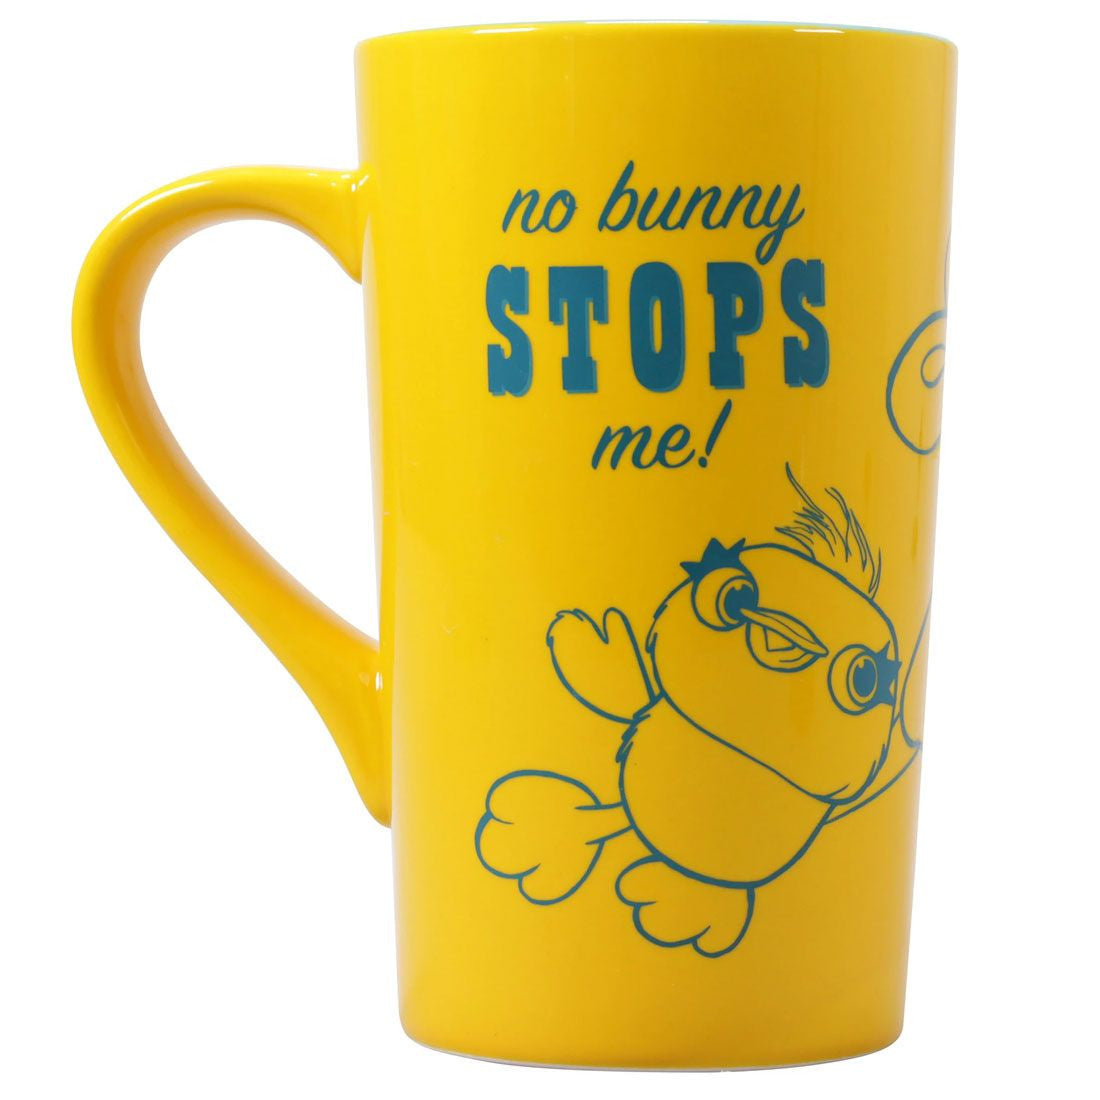 Toy Story Disney Mug - No Bunny Stops Me